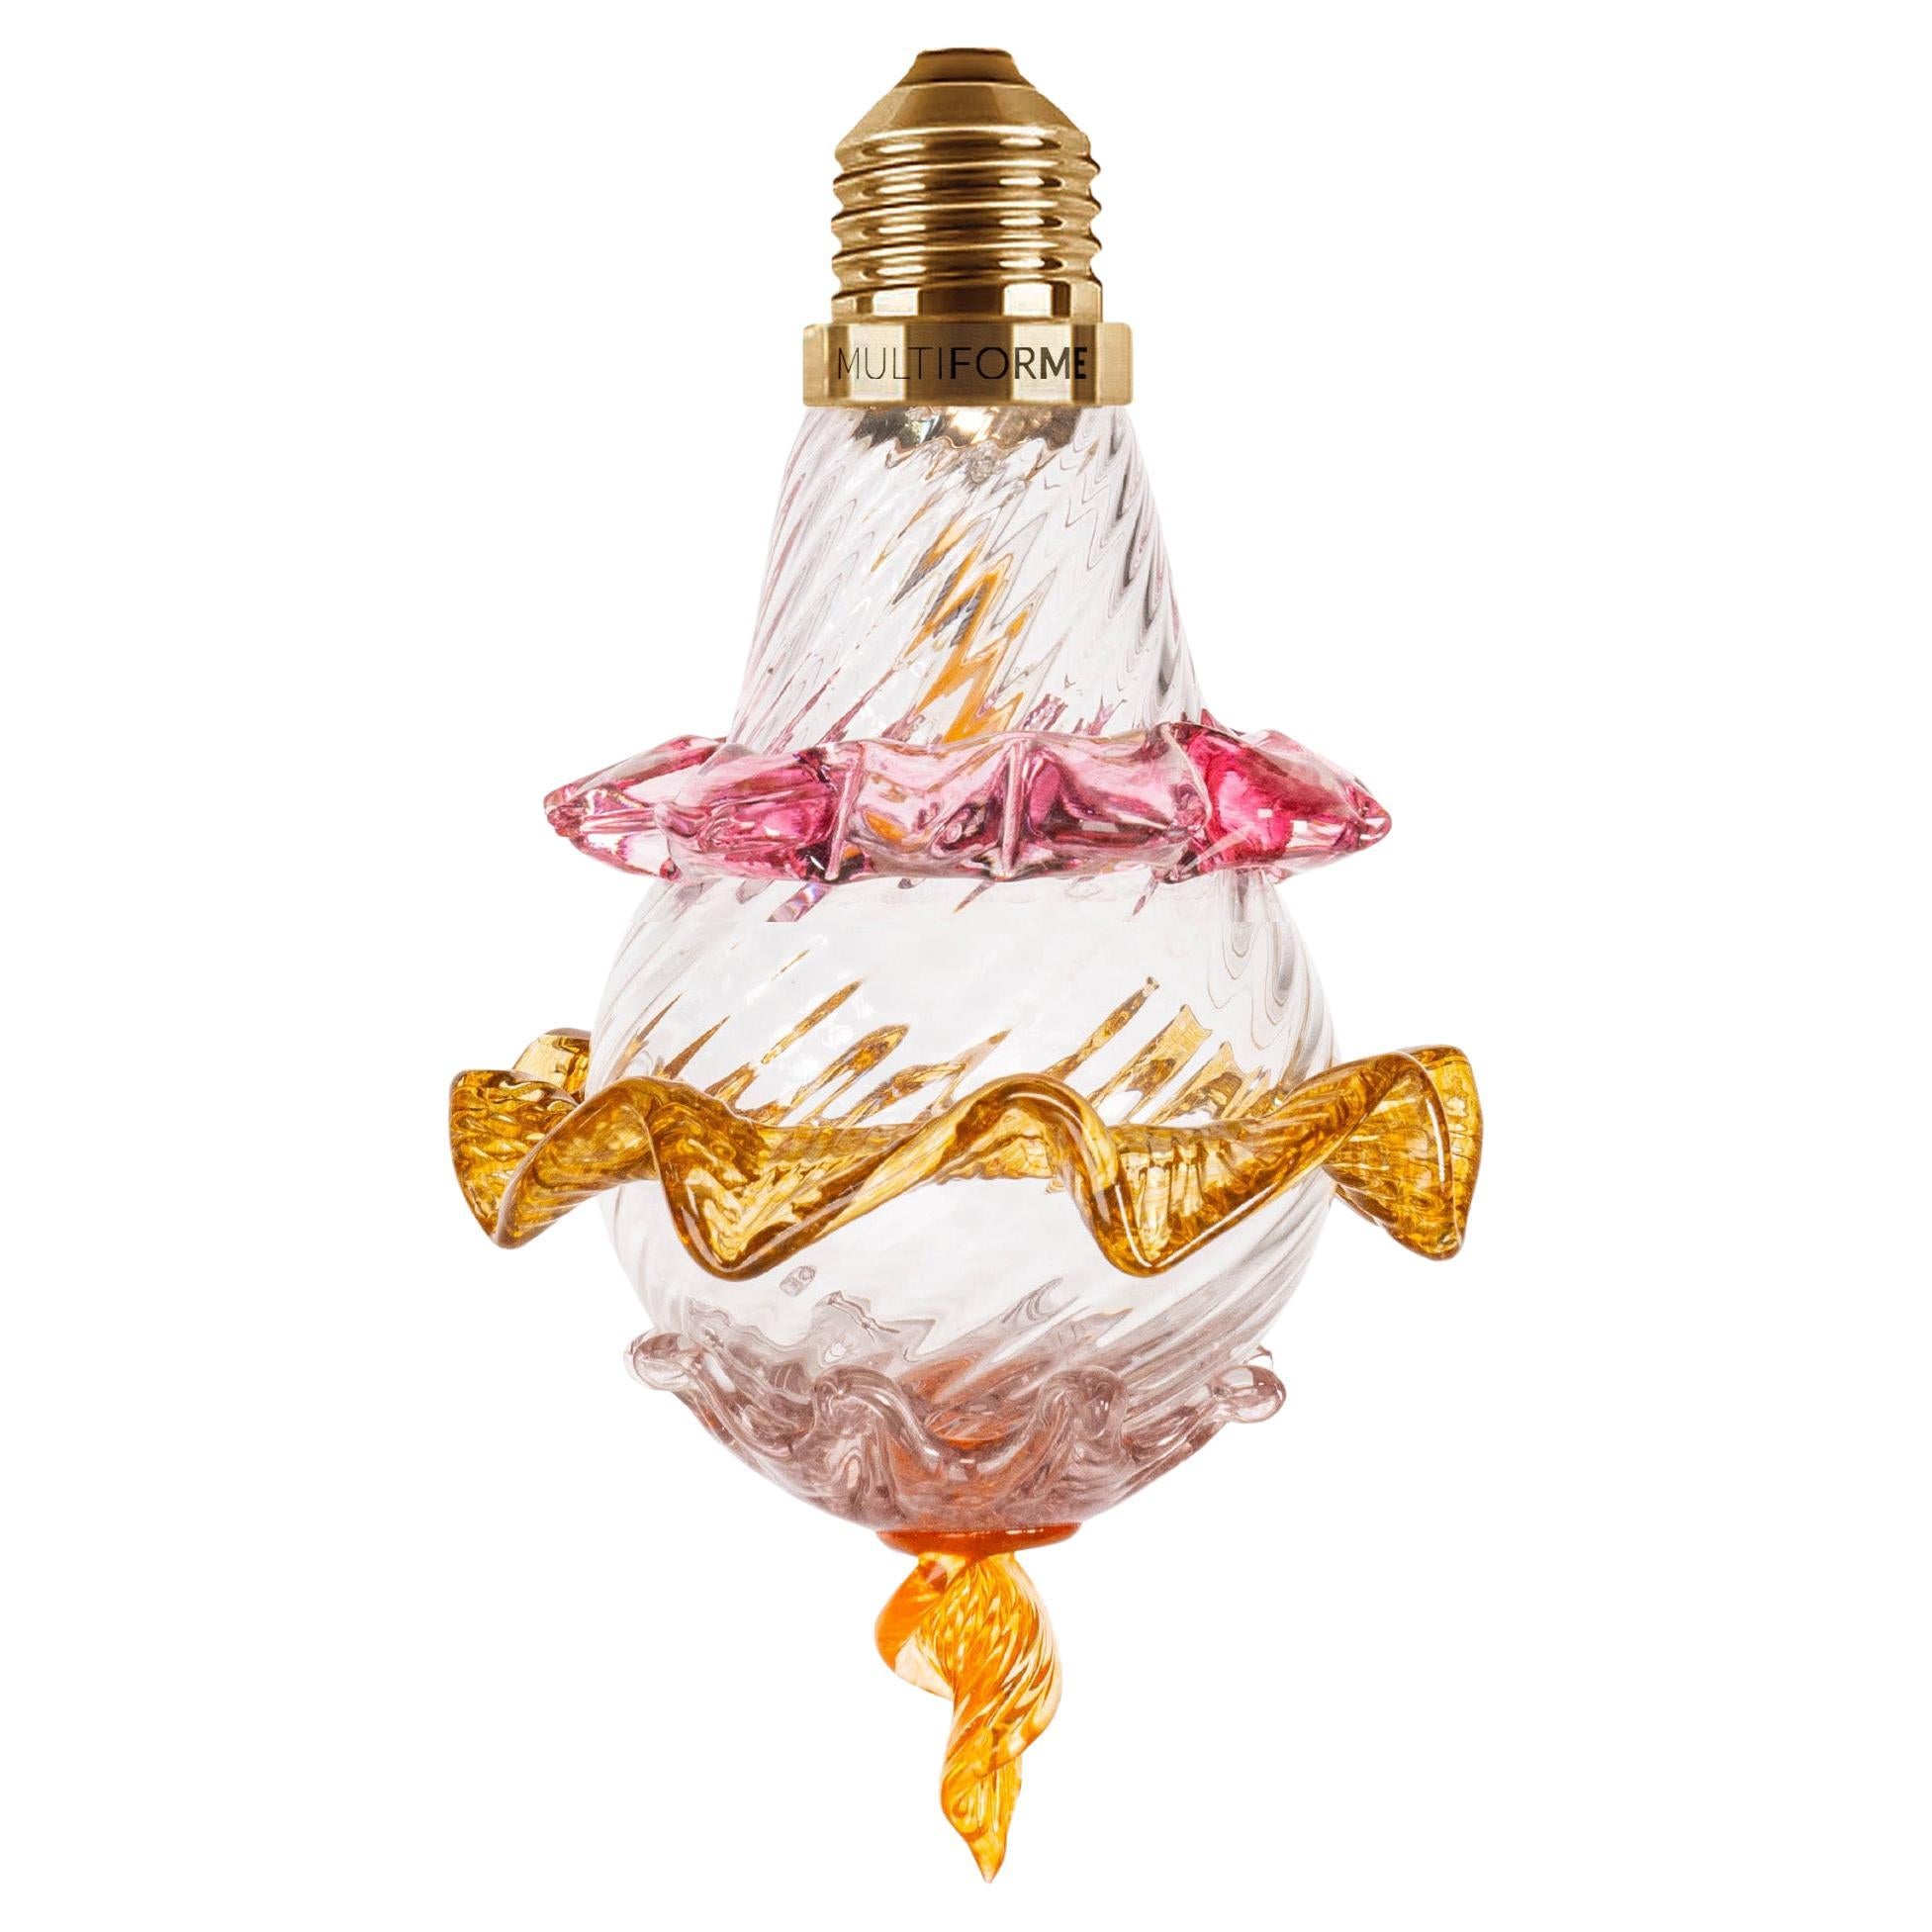 Artistic glass lightbulb chandelier Murano Bulb Marcantonio X Multiforme #09